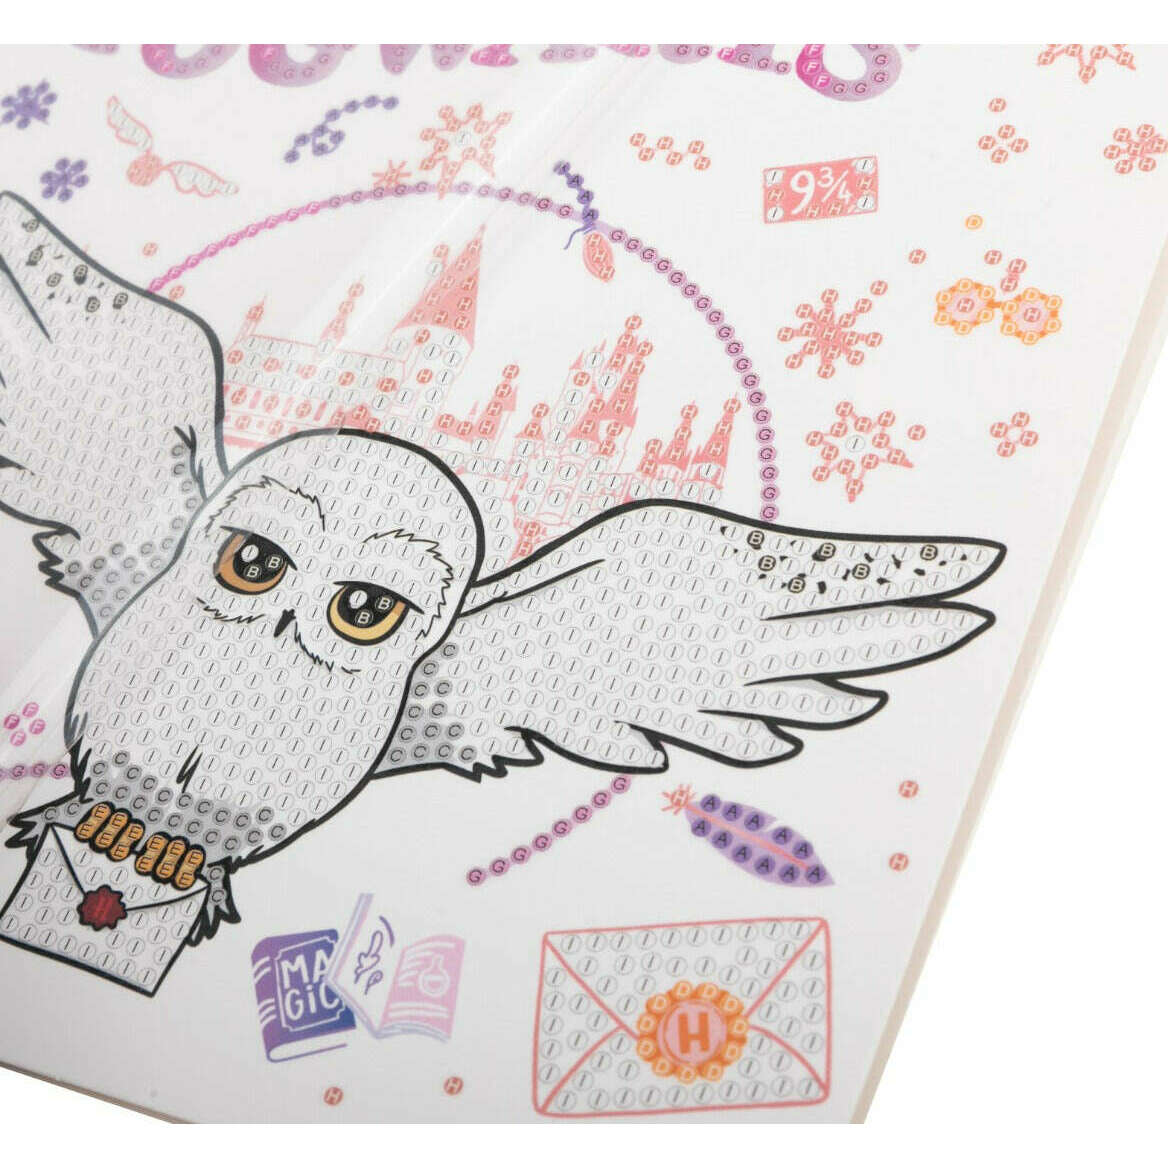 Toys N Tuck:Crystal Art Harry Potter Card Kit - Hedwig,Harry Potter